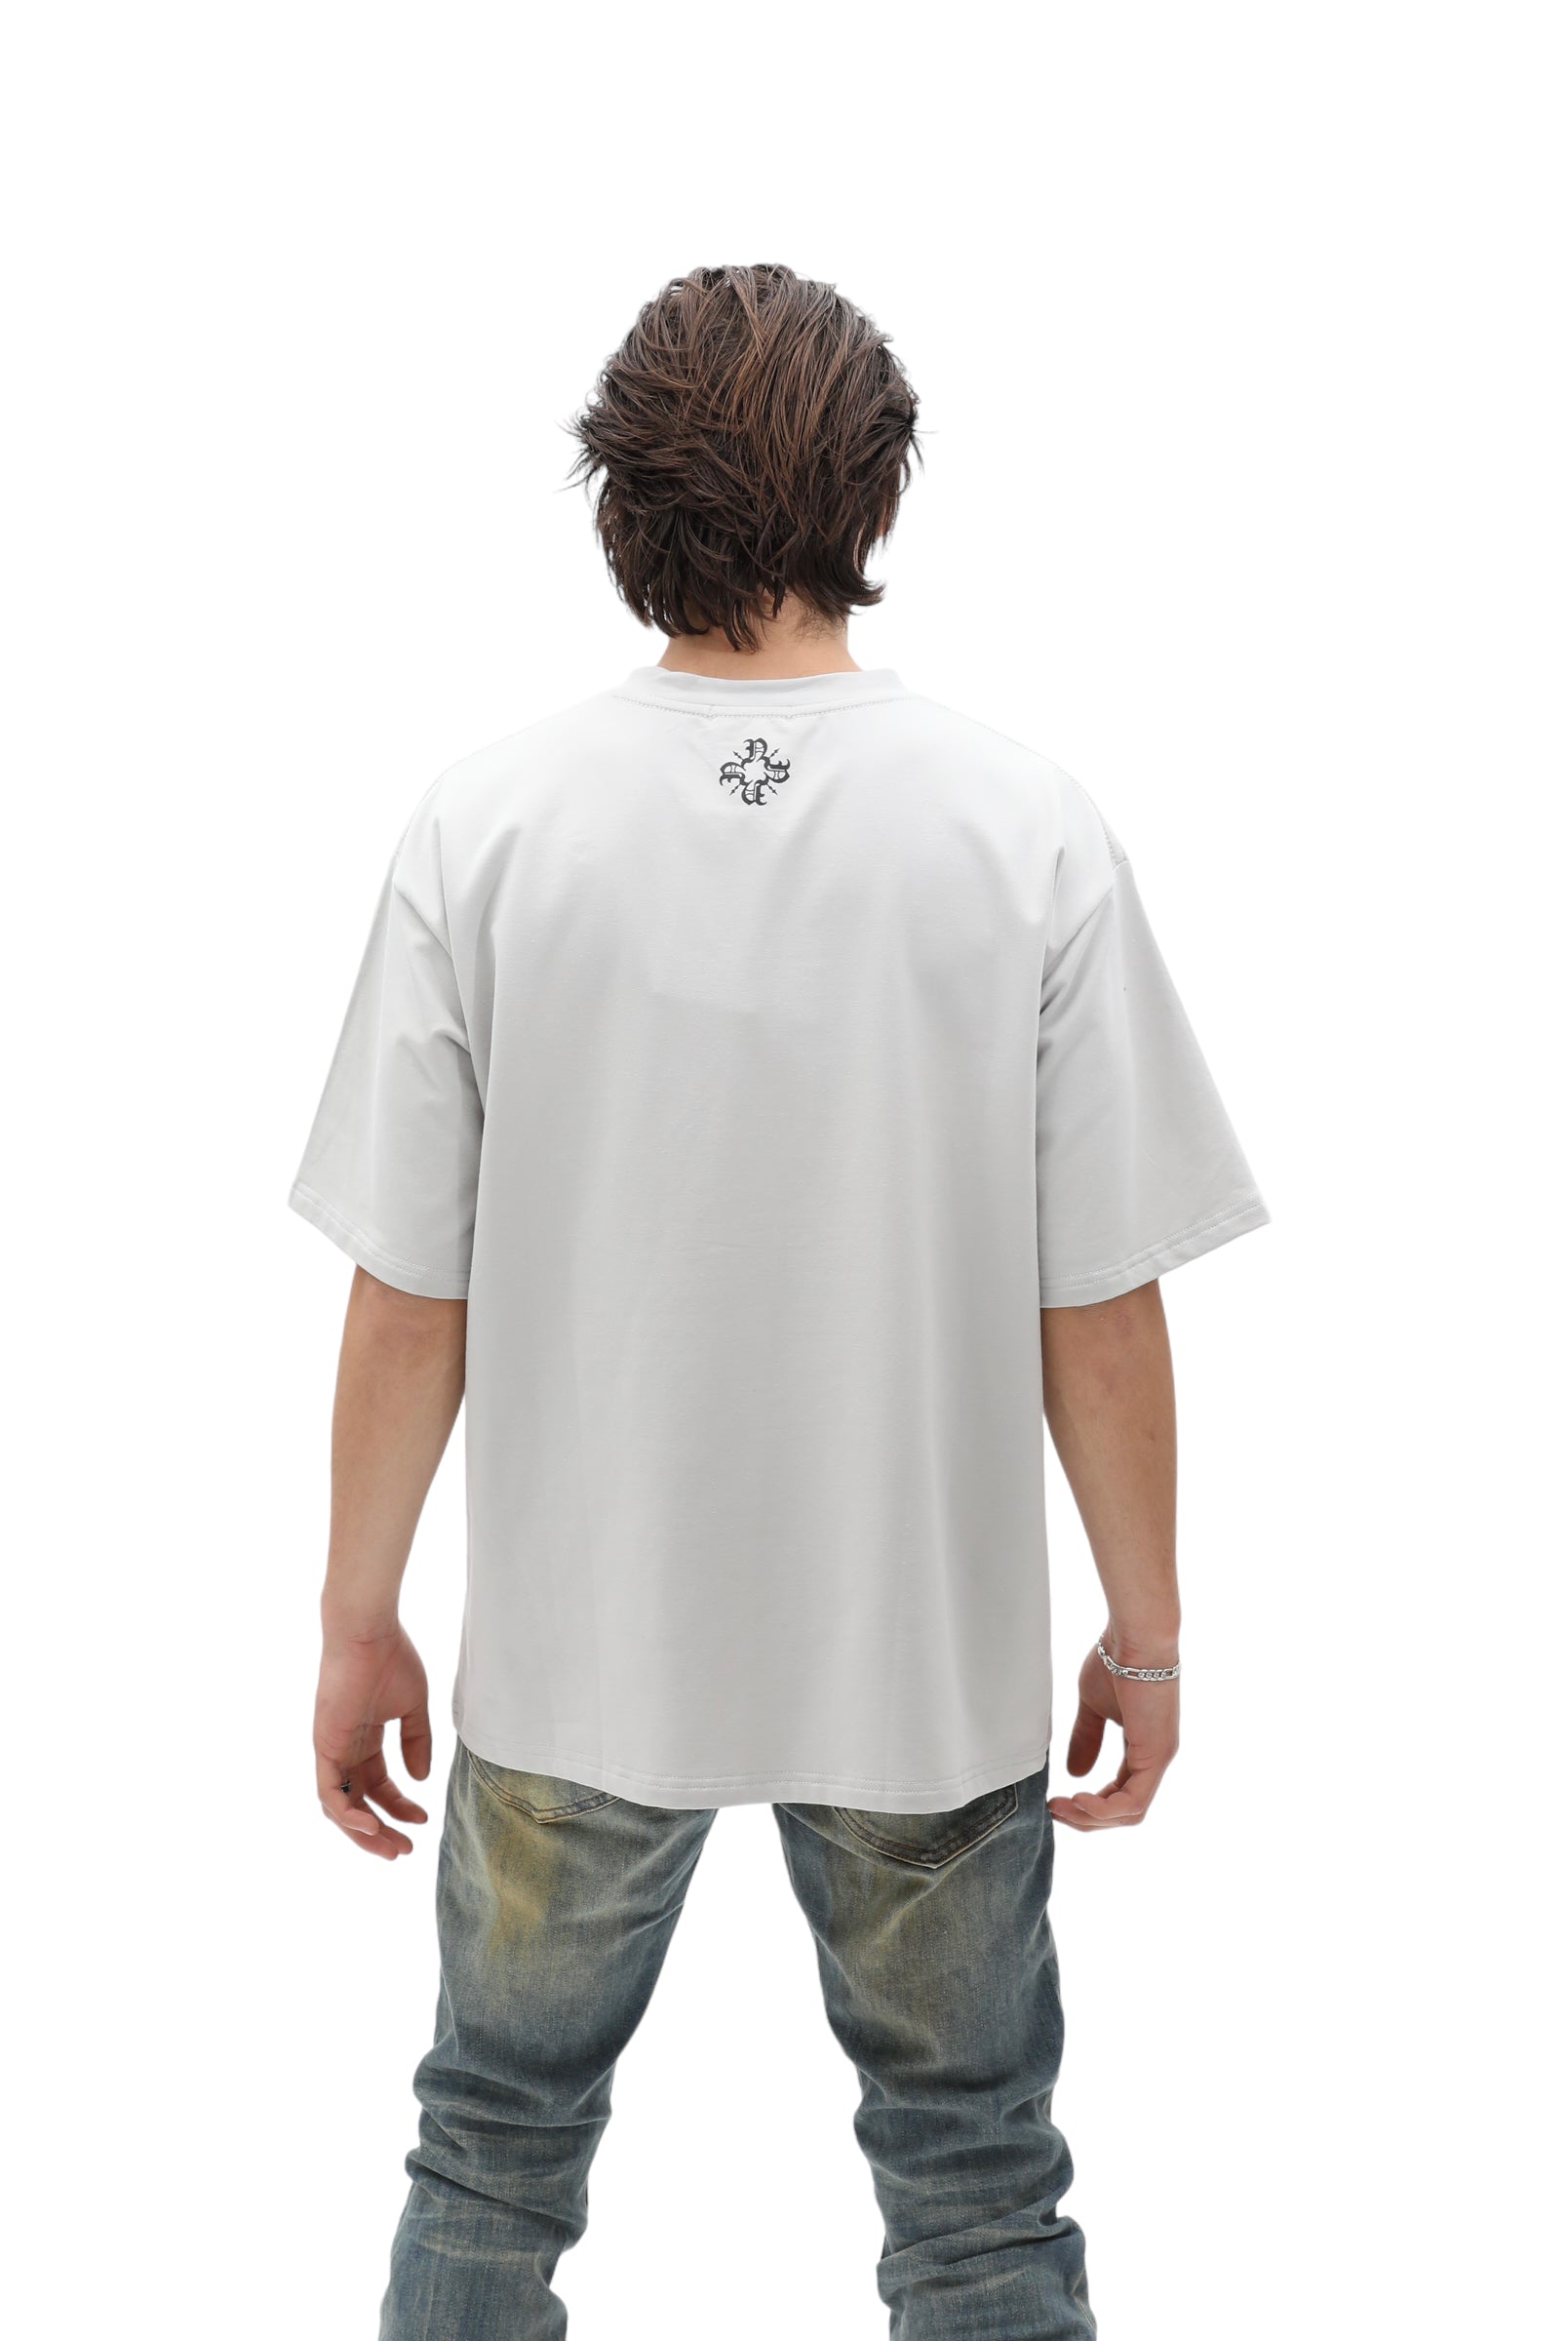 Monogram Cupid War T Shirt - Grey